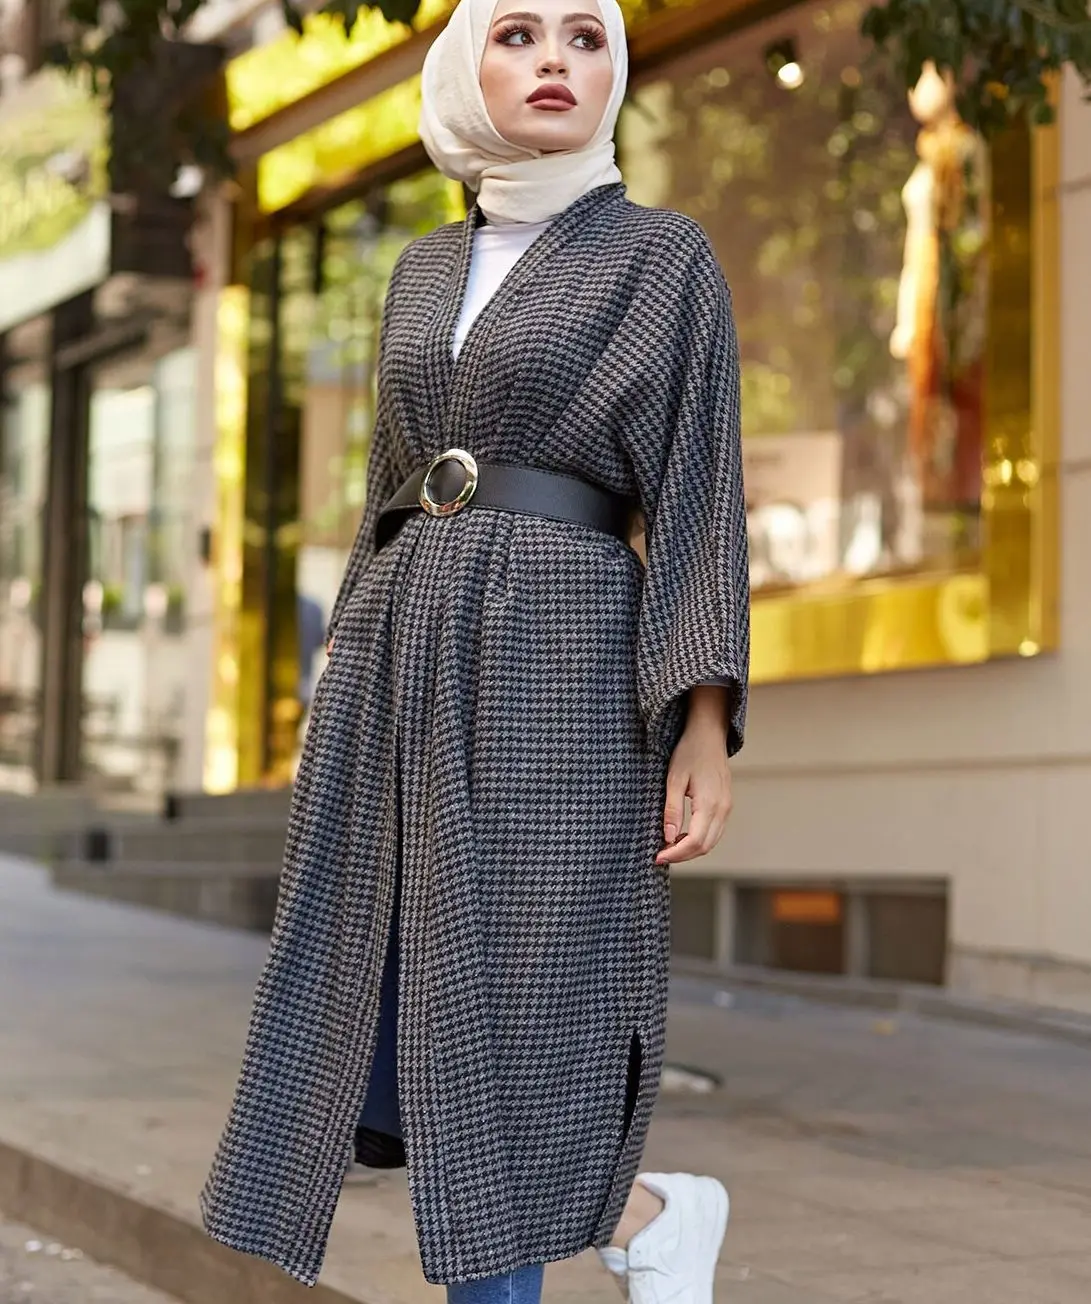 TUGBA Female Arched Cap Kimono Gray Cardigan İslamic Muslim clothes for ladies casual spring summer Muslim turkish